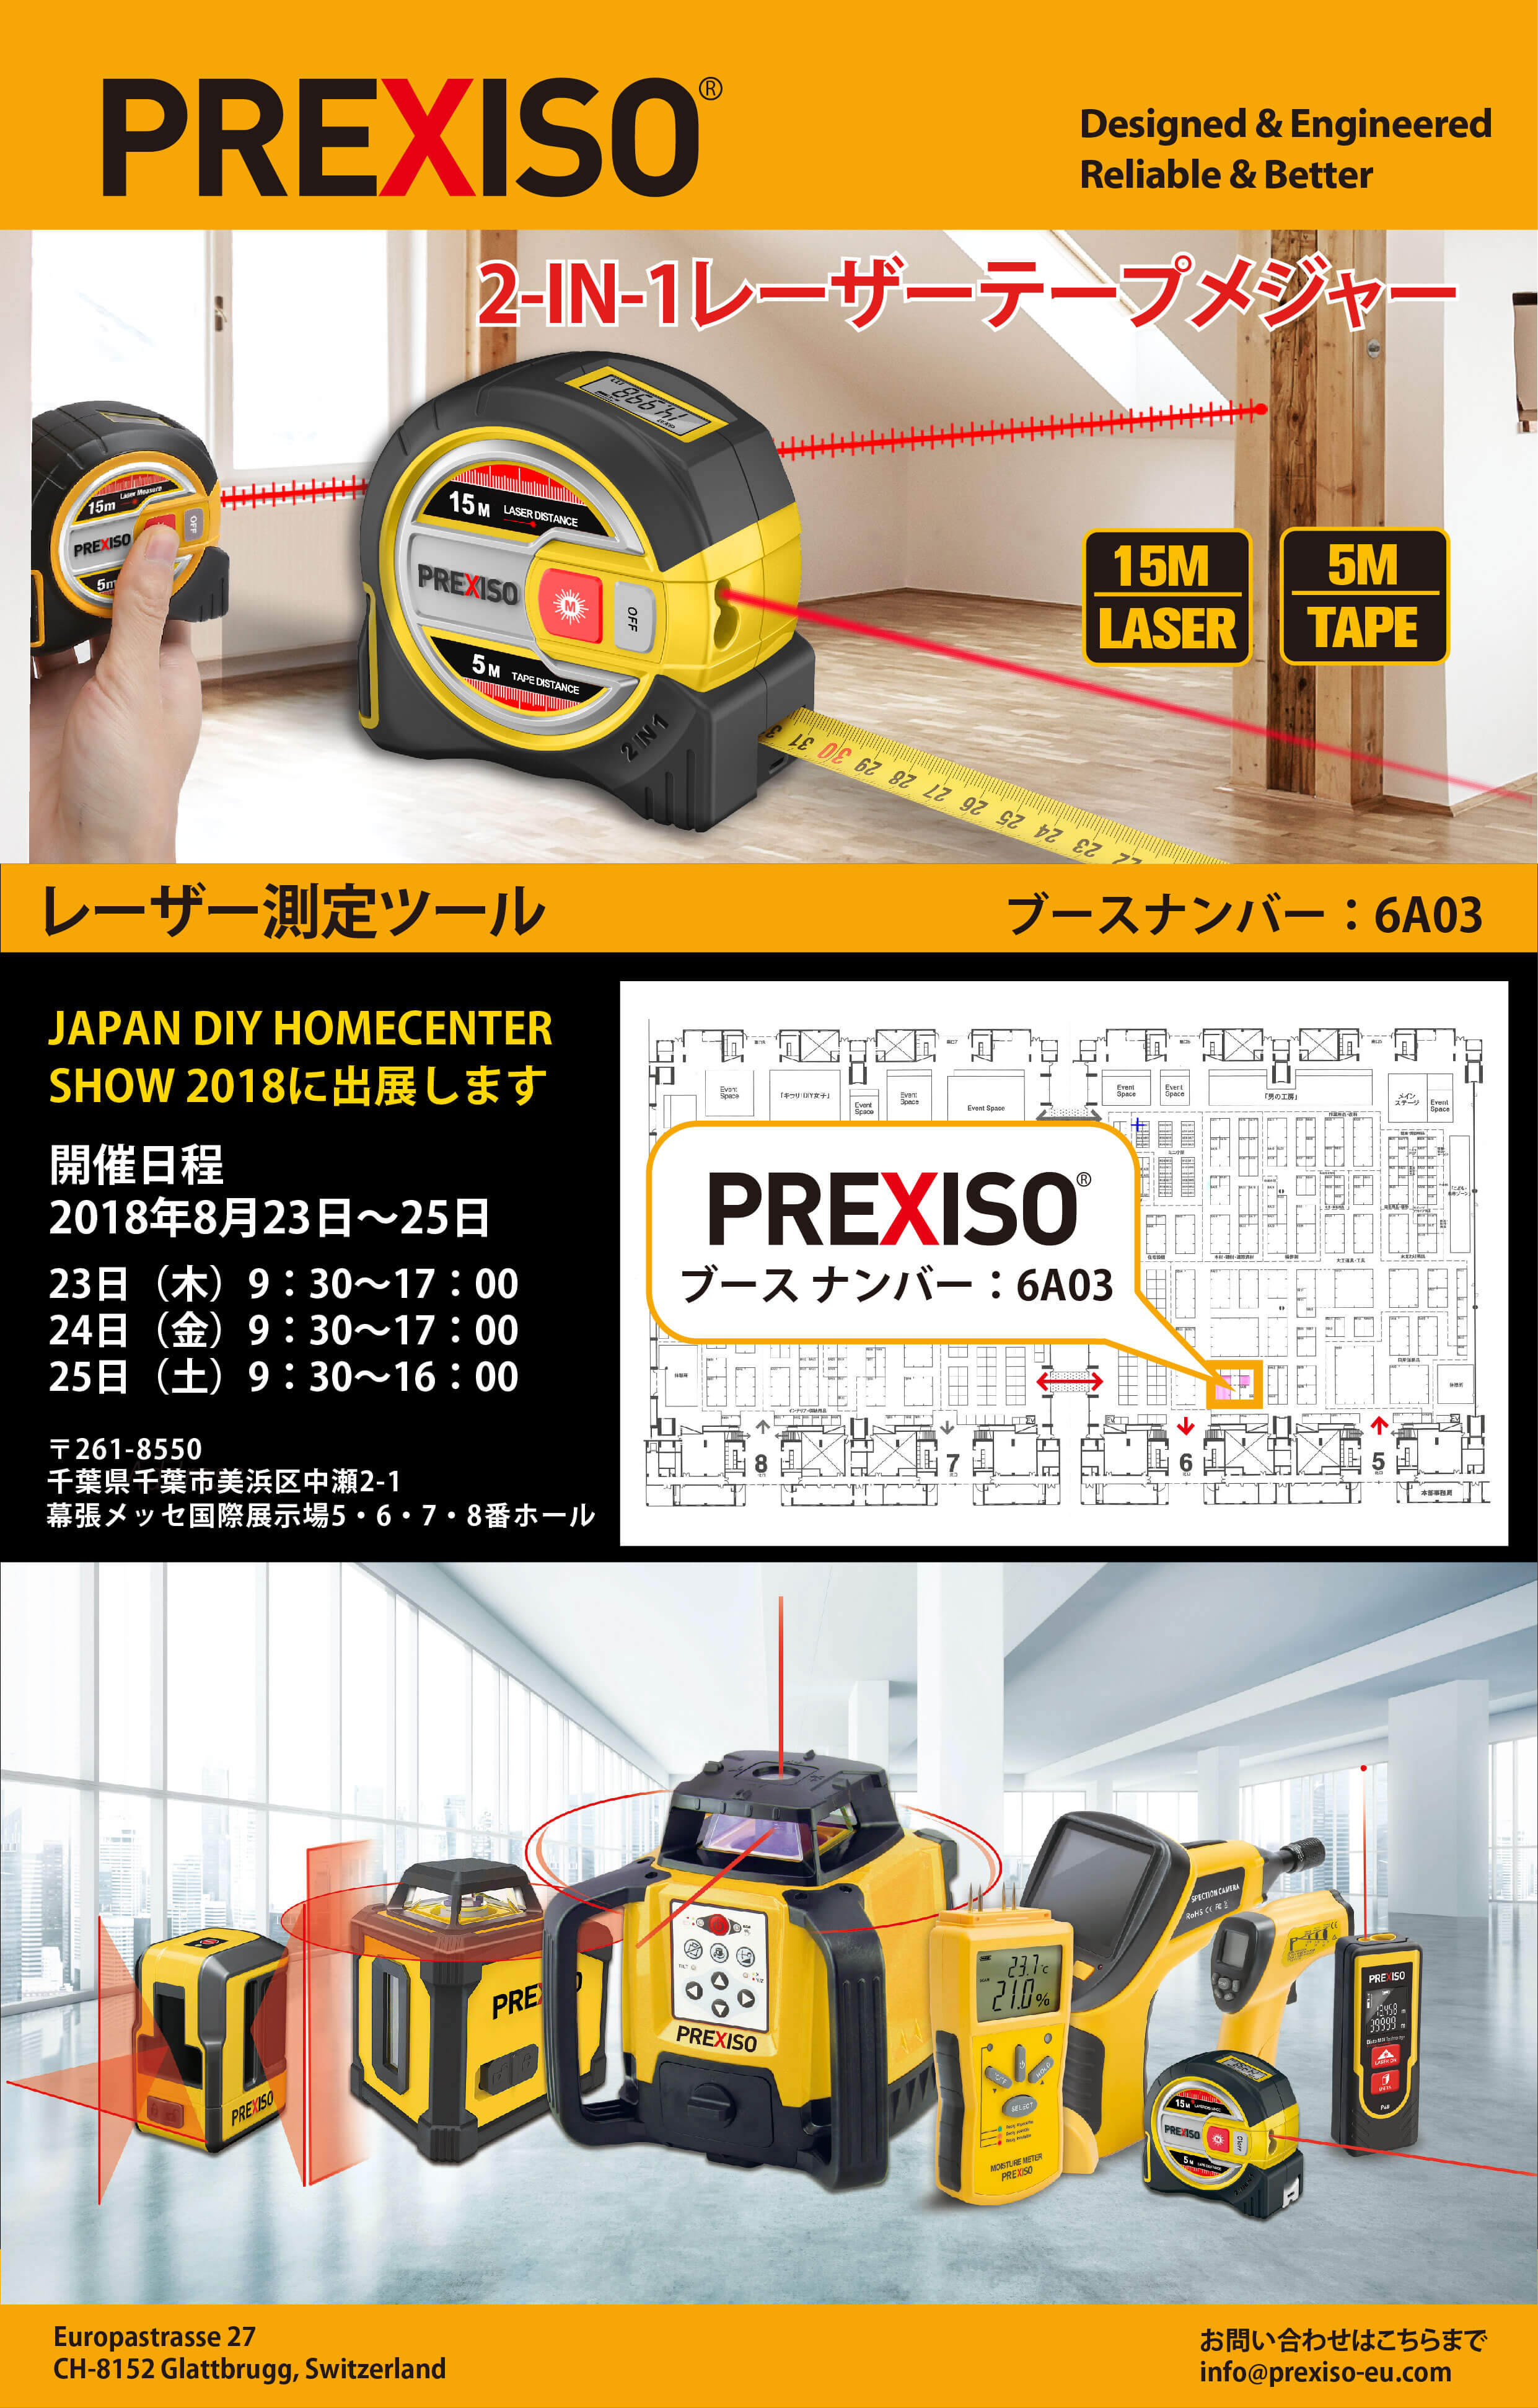 PREXISO-Invitation for JAPAN DIY homecenter show 2018 - Janpanese.jpg